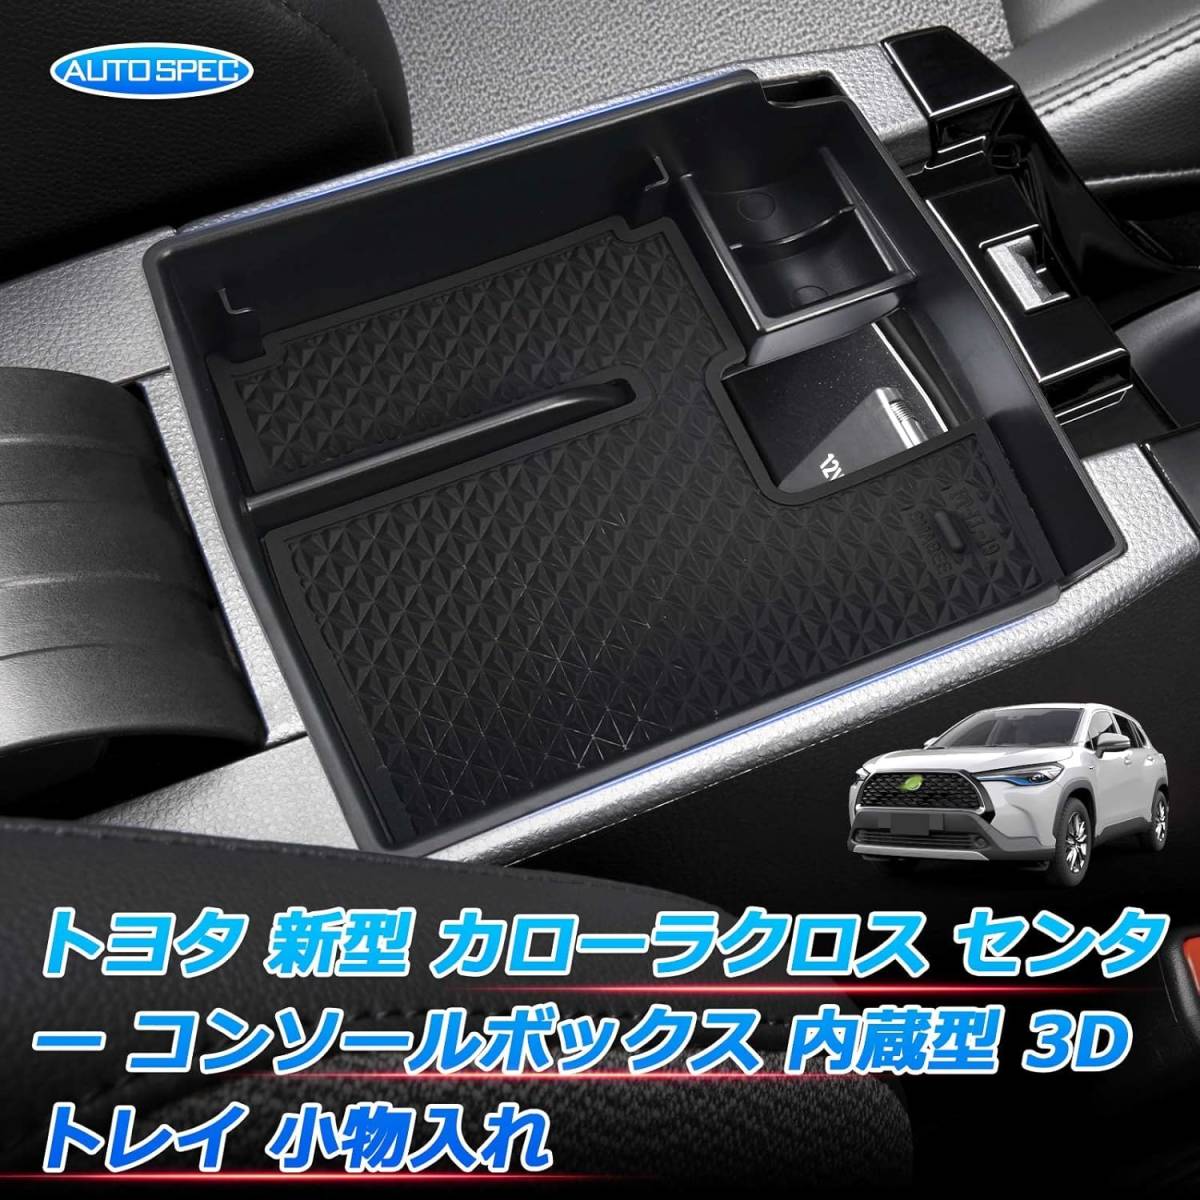 Auto Spec トヨタ 新型 カローラクロス 内蔵型コンソールボックス COROLLA CROSS 車内収納ボックス コンソー_画像2